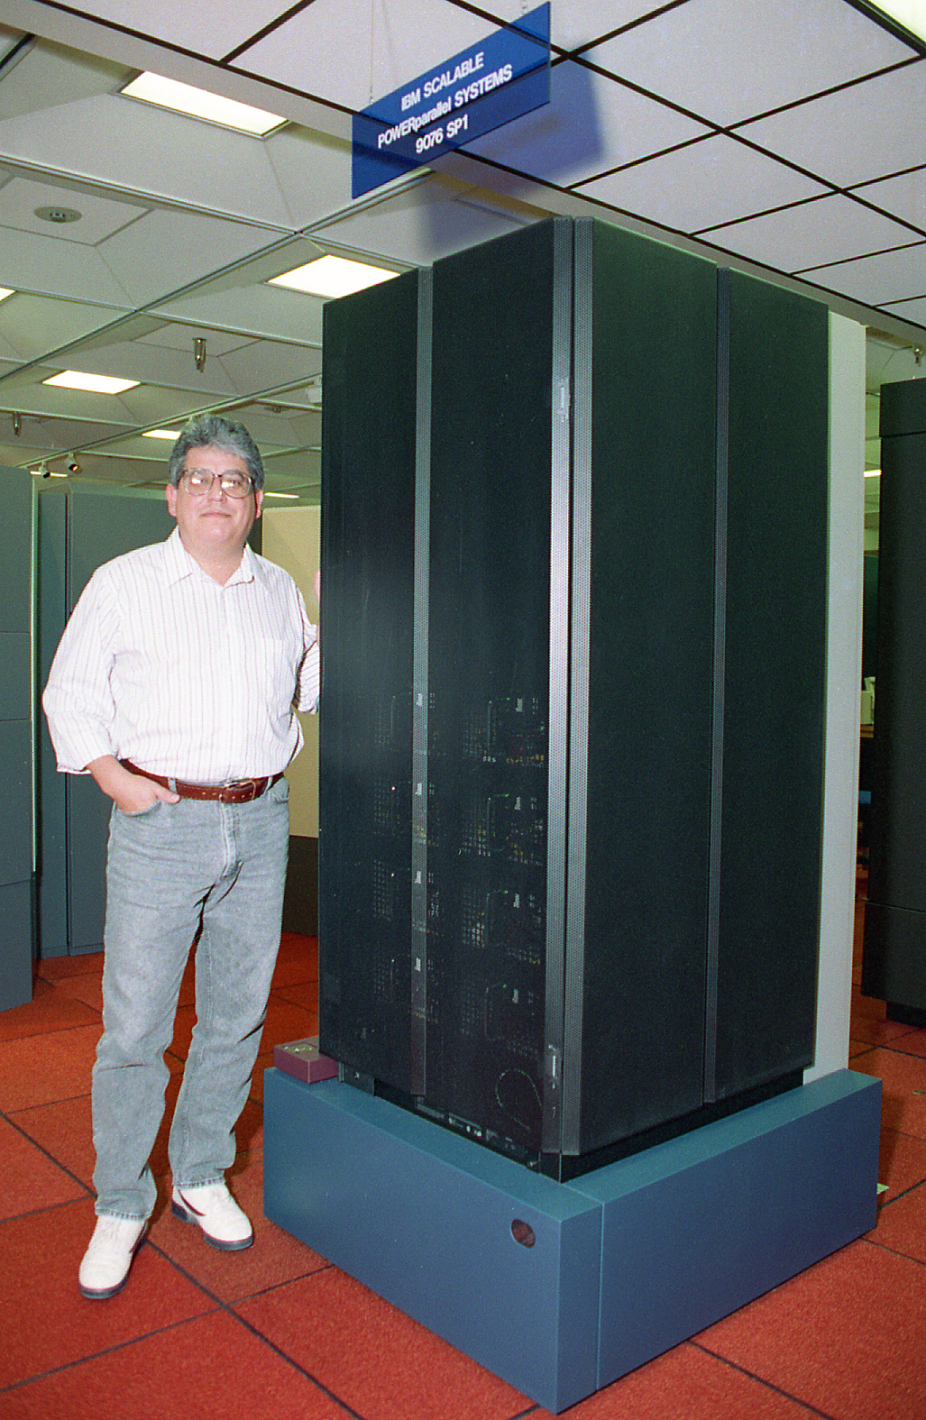 IBM 9076 SP1 system